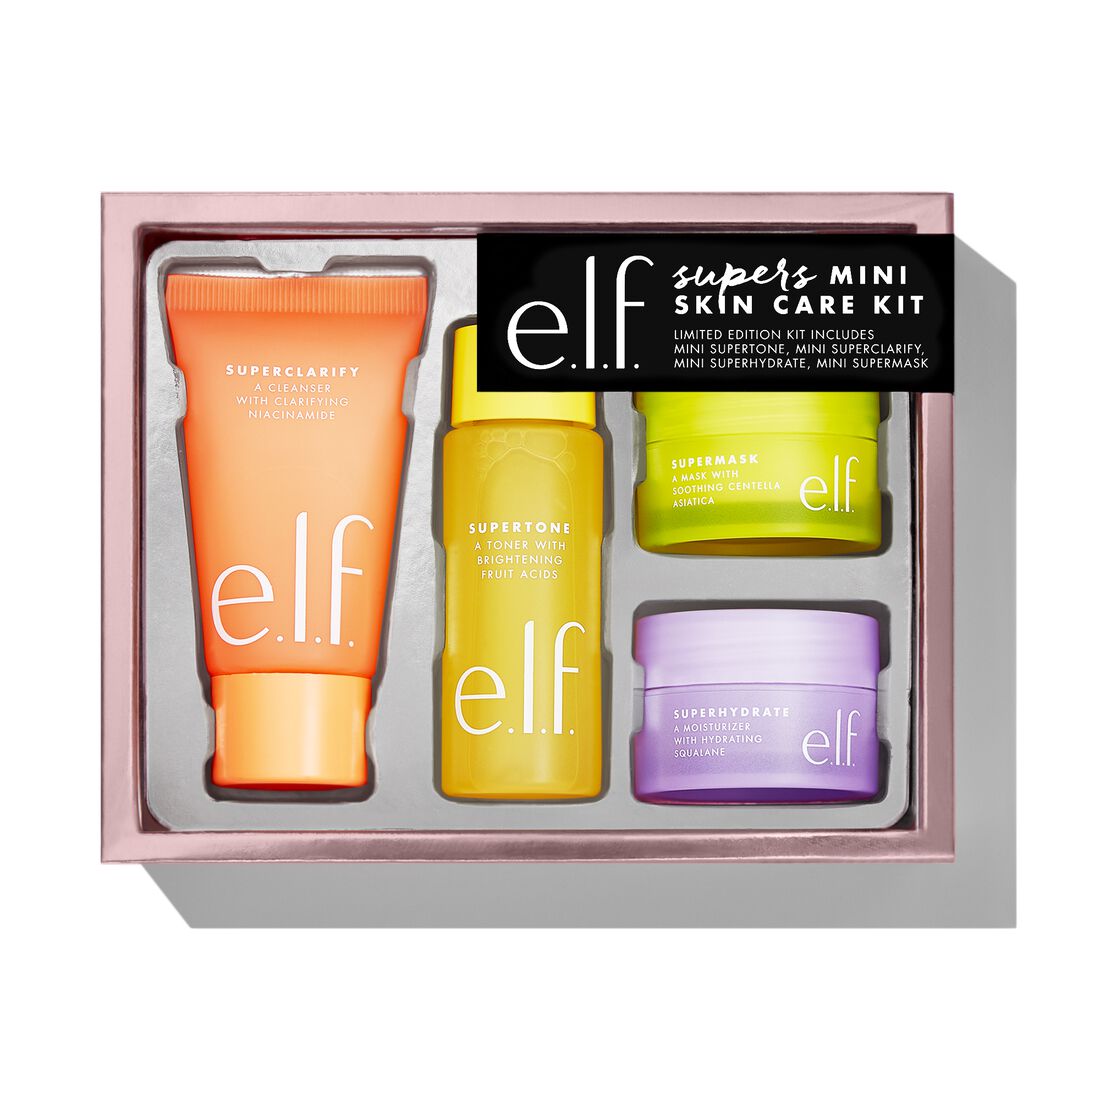 Supers Mini Skin Care Kit | e.l.f. Cosmetics